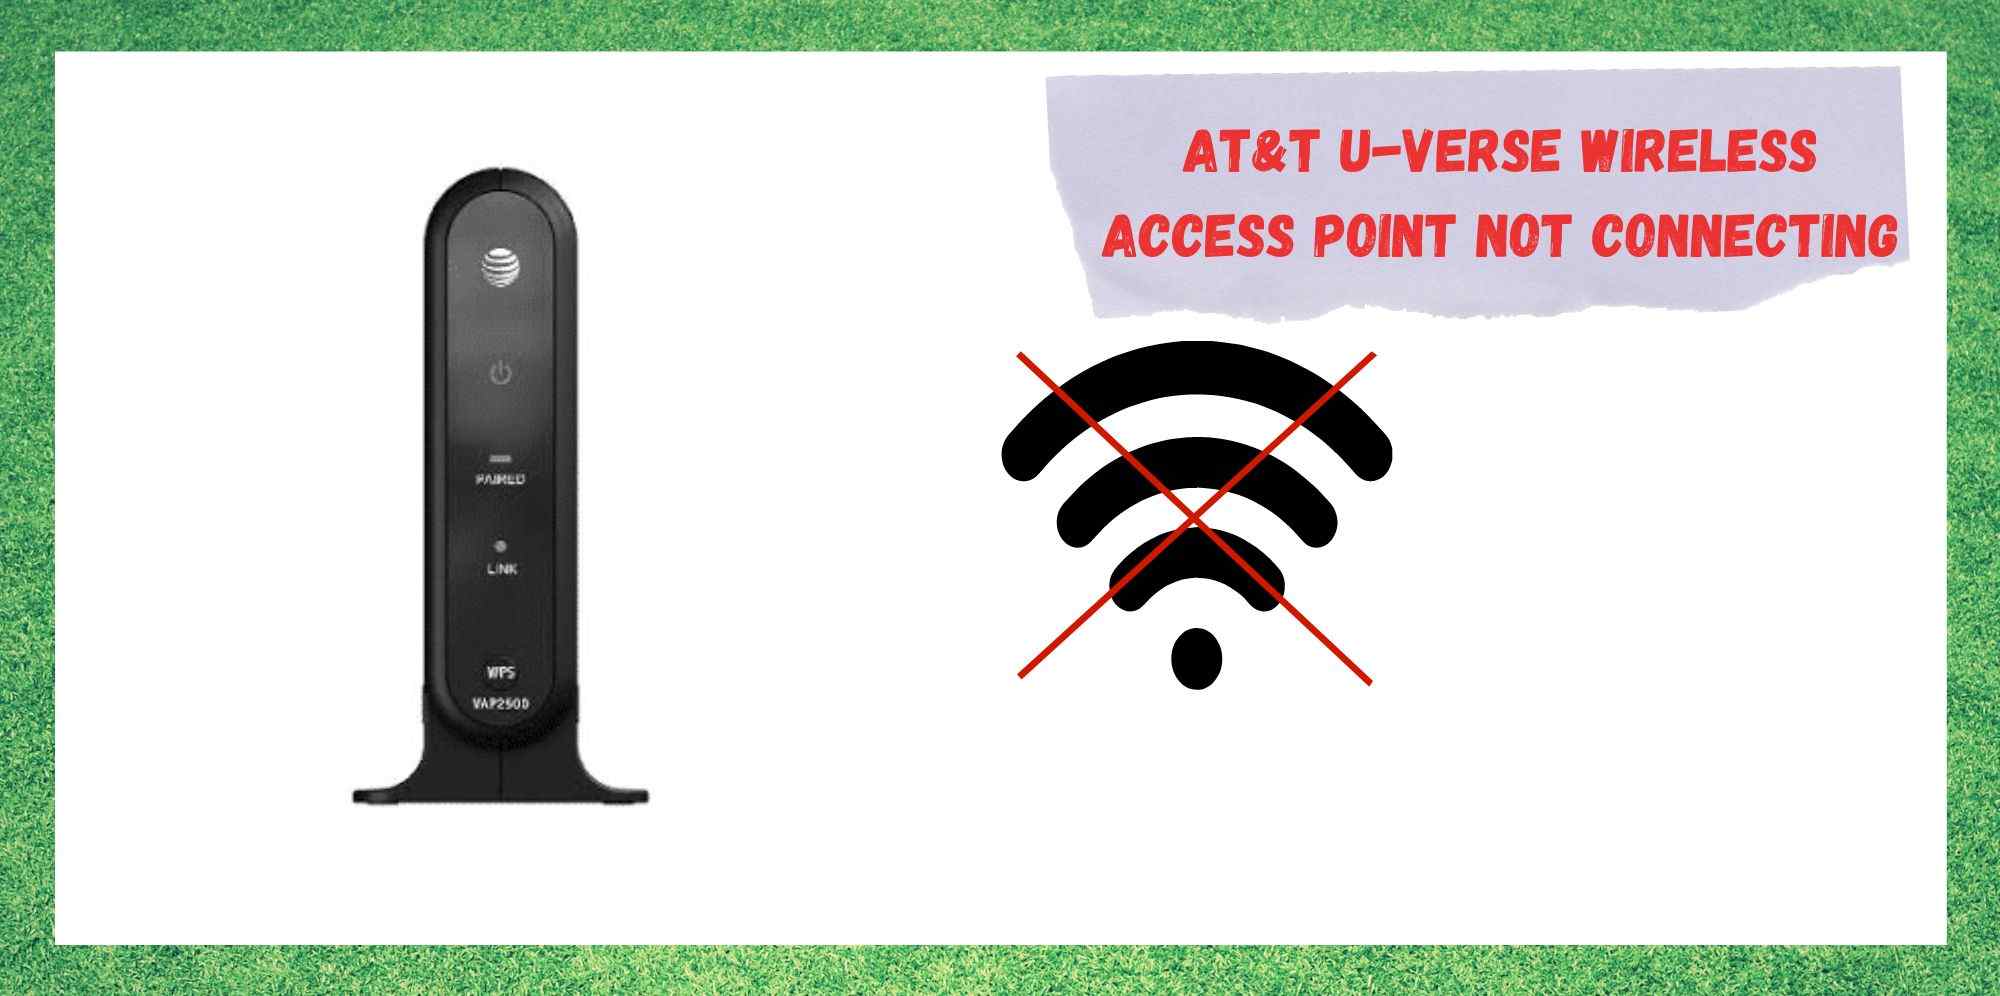 att u-verse wireless access point not connecting